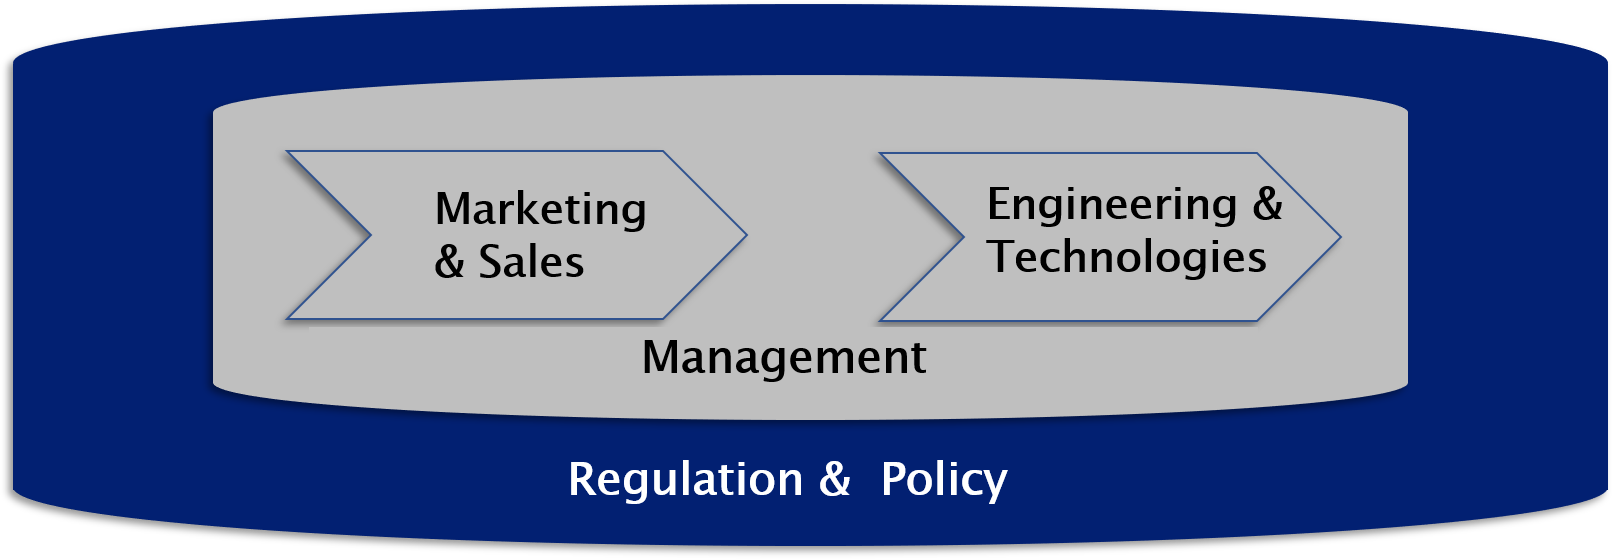 corporate training regulation graph